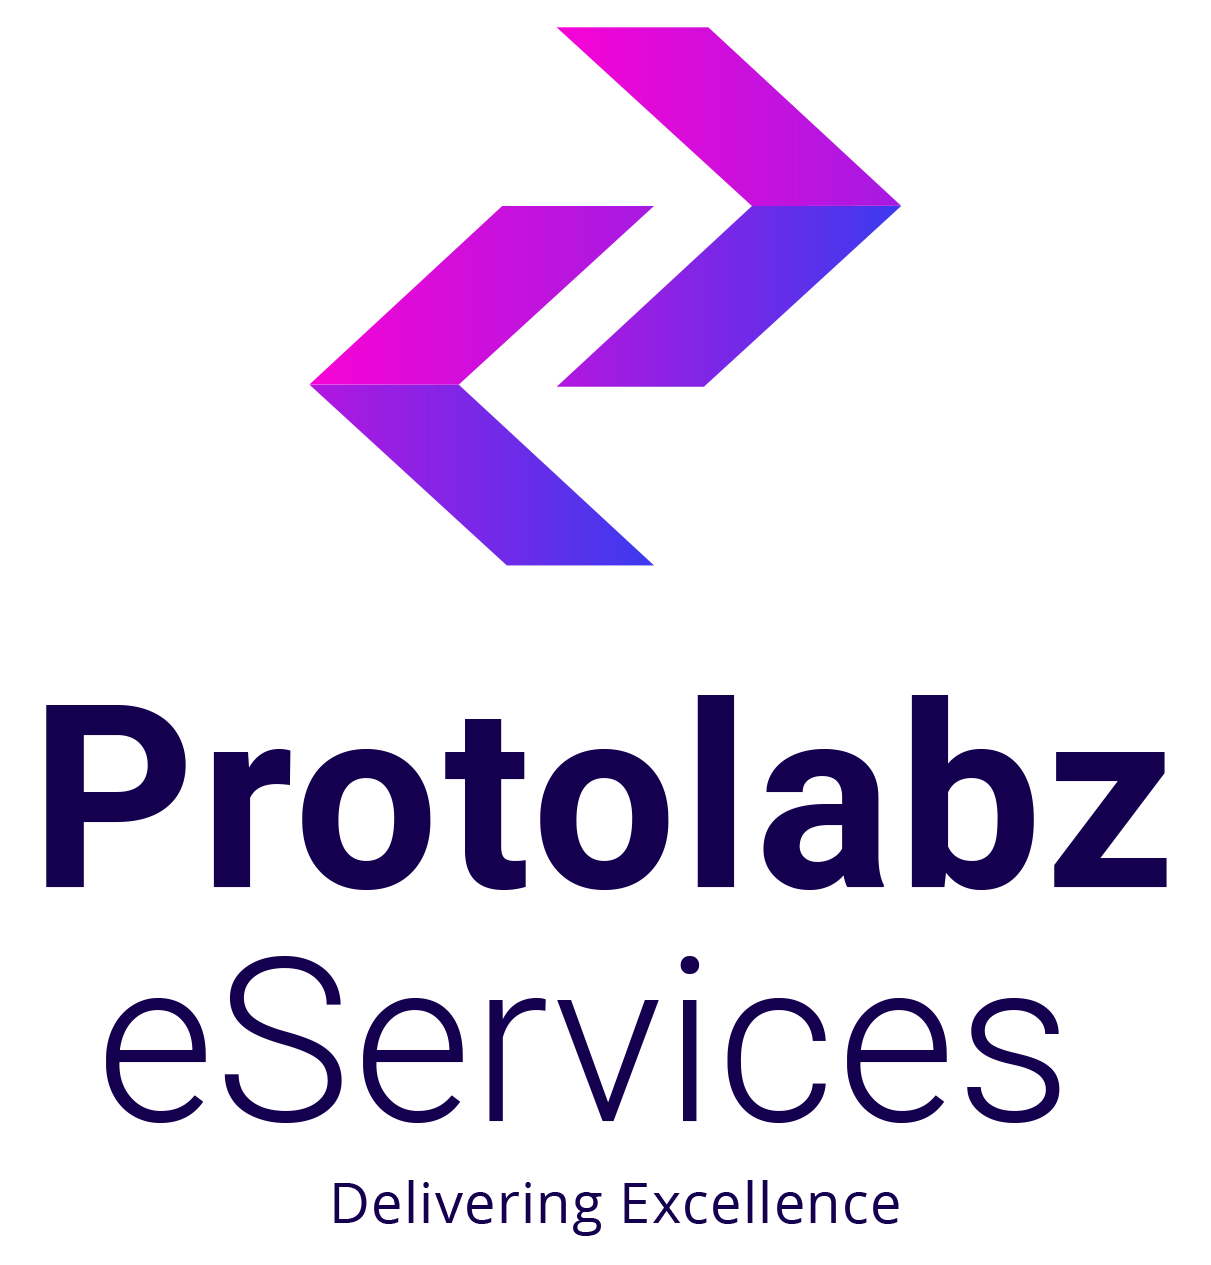 Protolabz eServices - Logo